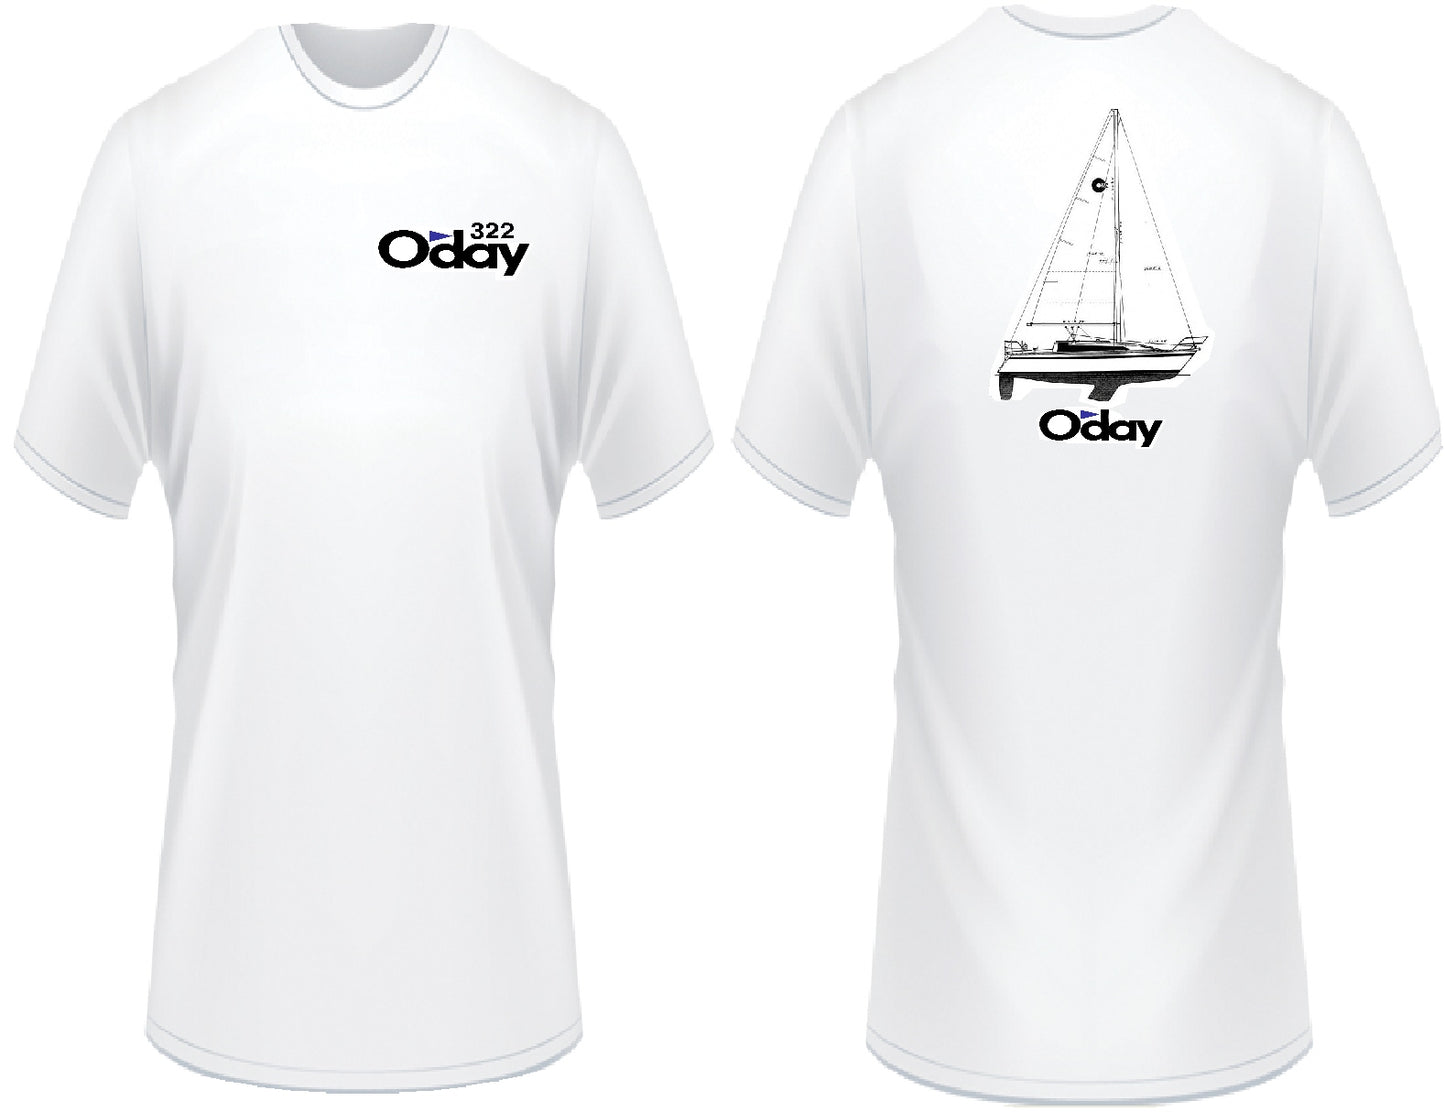 Oday 322 T-Shirt